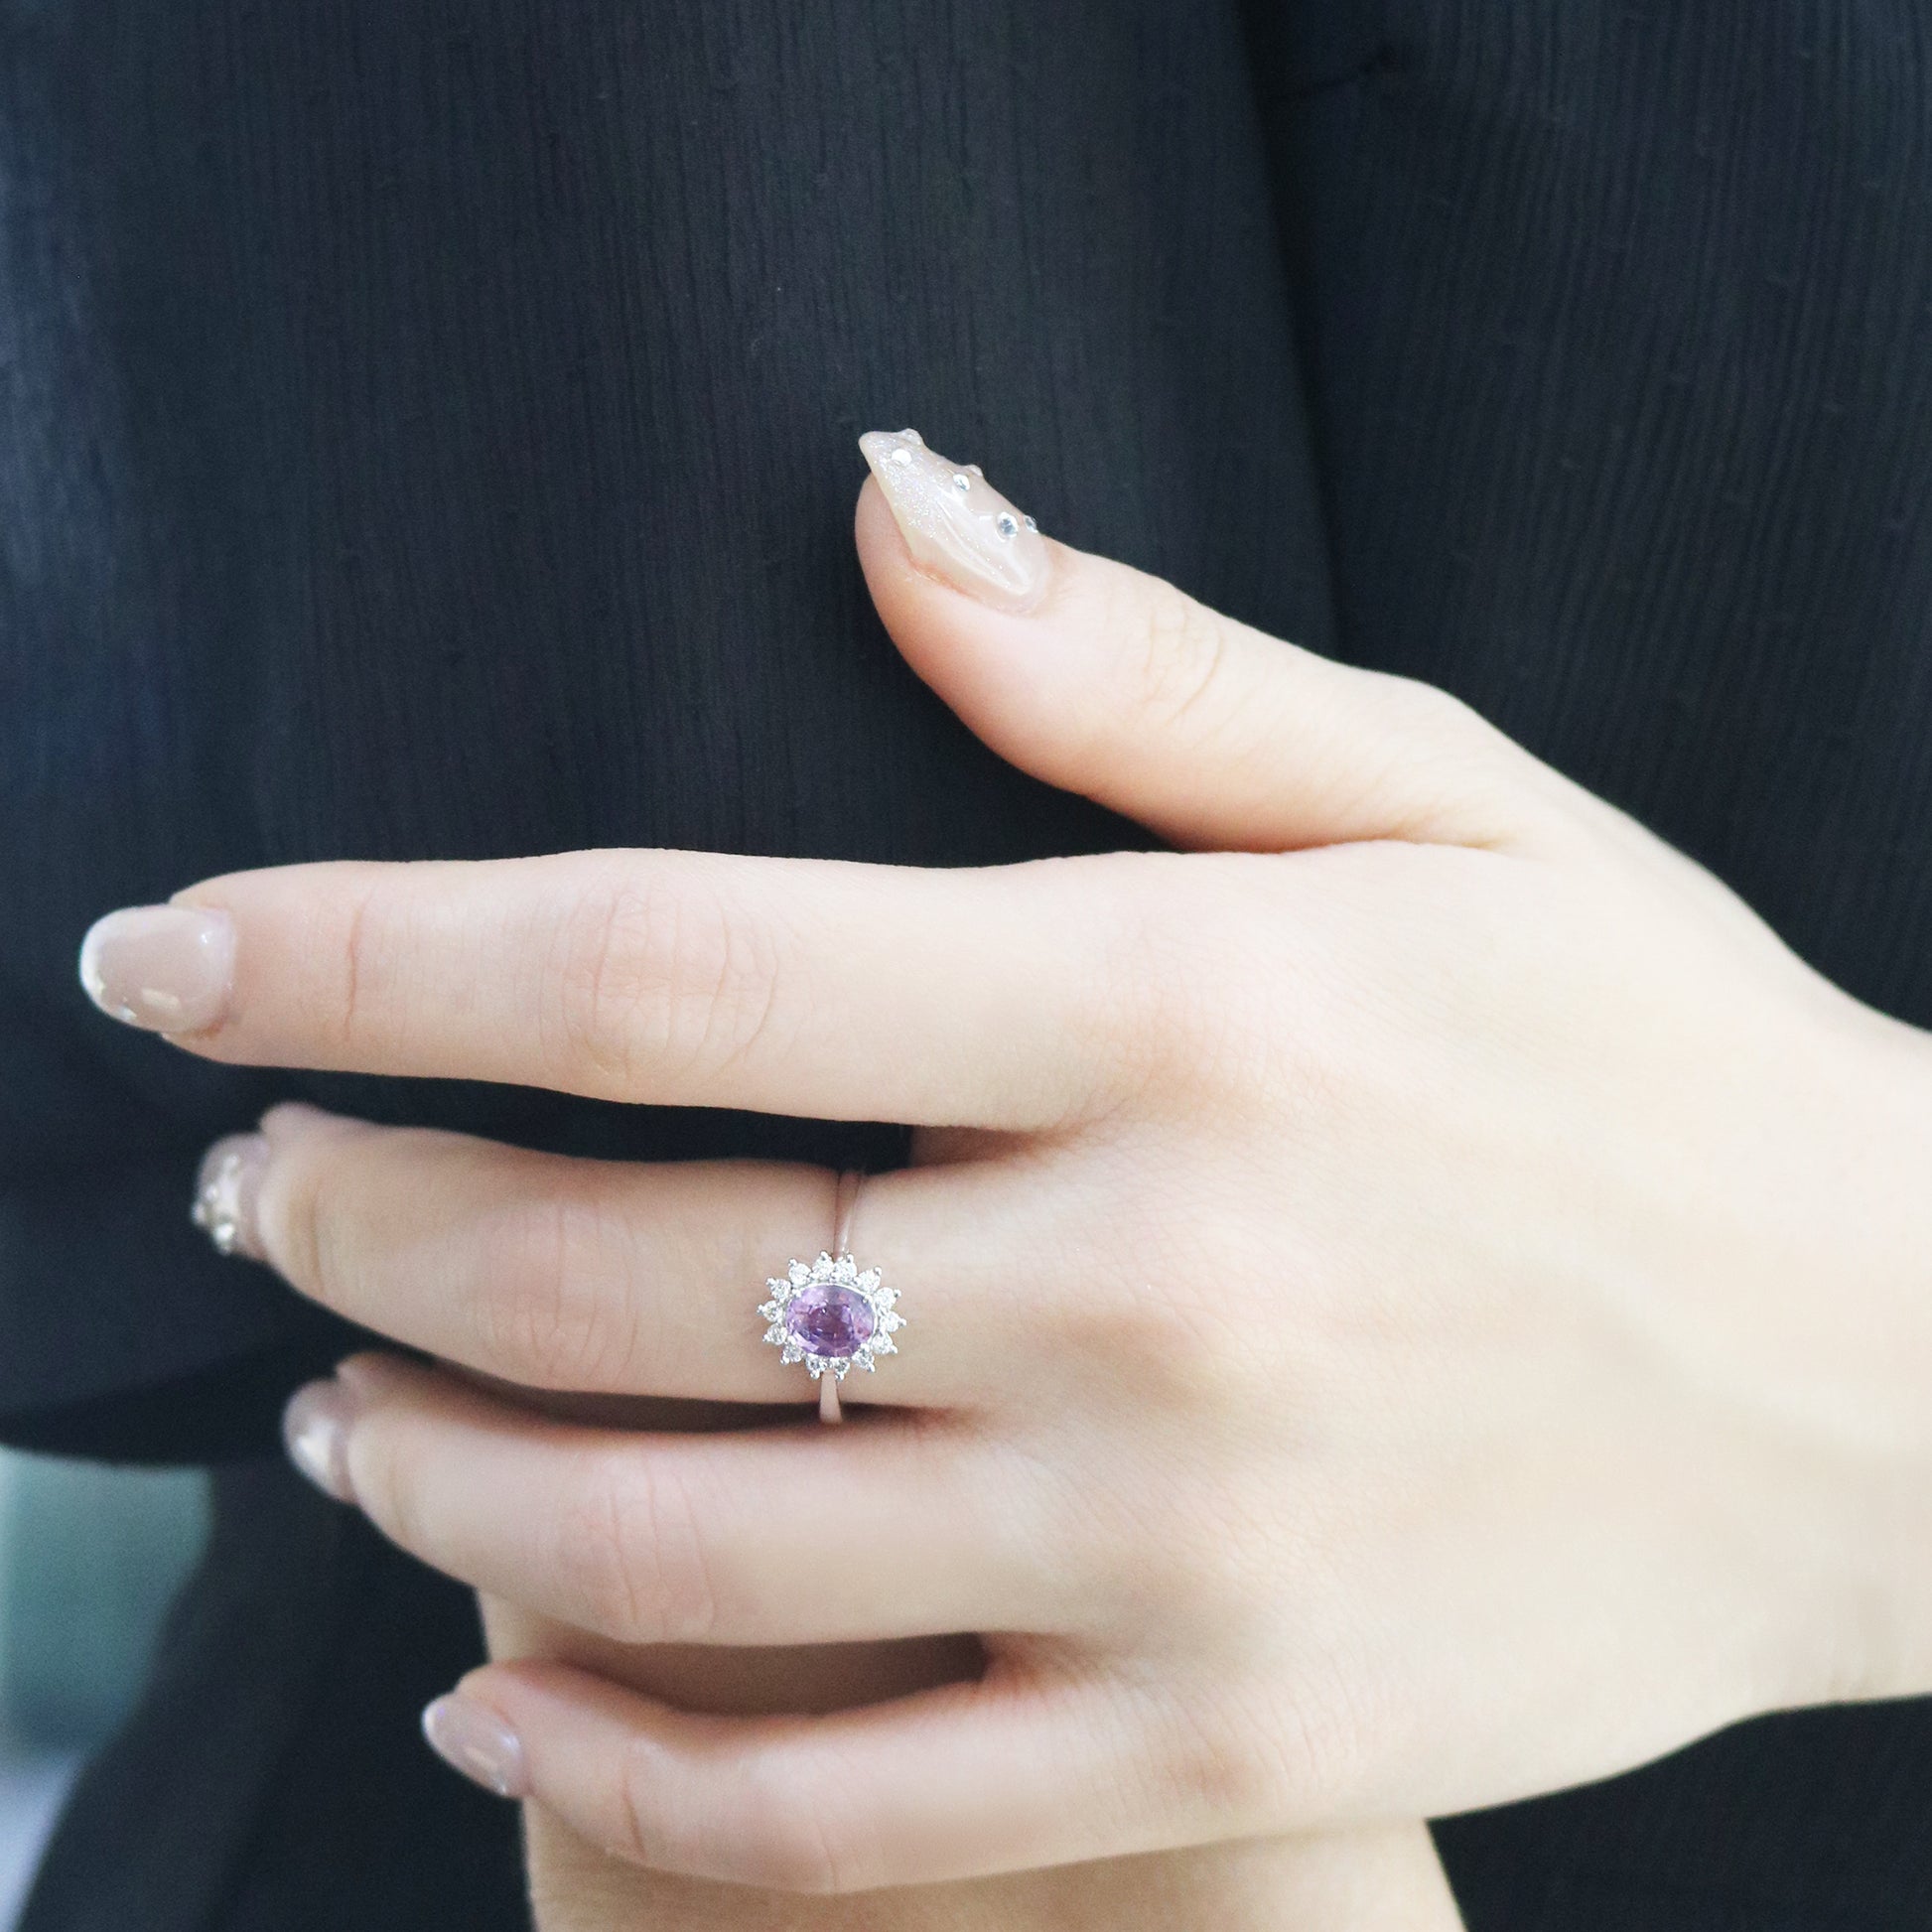 18k白金紫色藍寶石戒指在中指上 18k White Gold Purple Sapphire Ring on middle finger